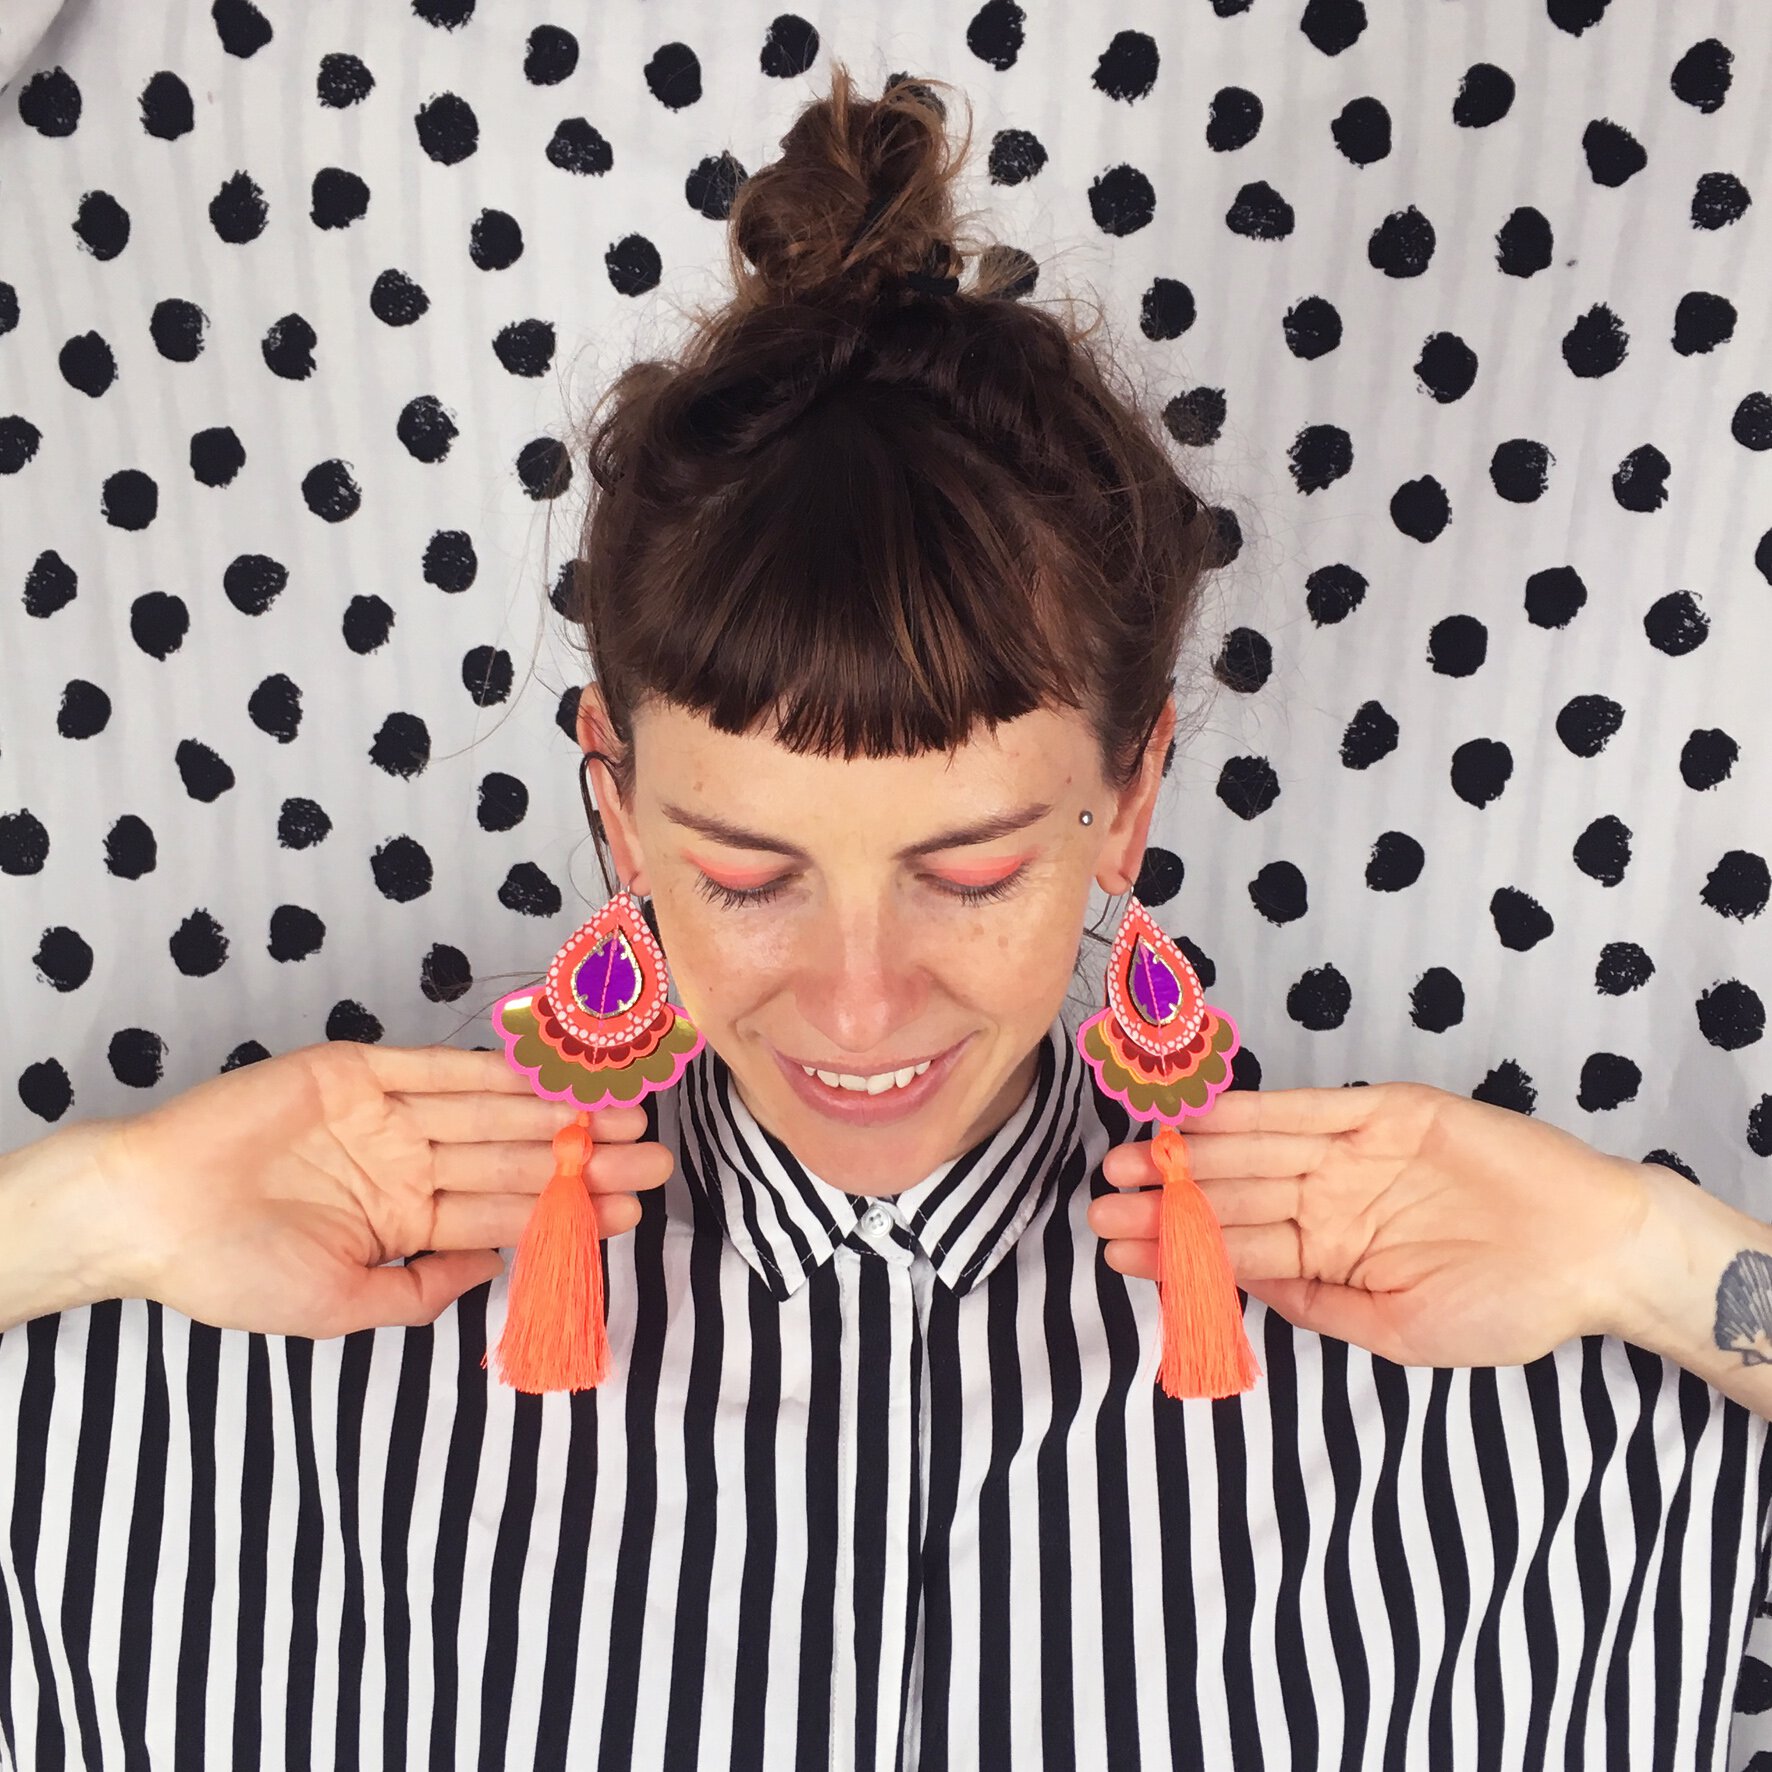 dakota rae dust designer bec denton wearing a monochrome striped shirt against a black and white polka dot wall, wearing fluorescent statement tassel earrings